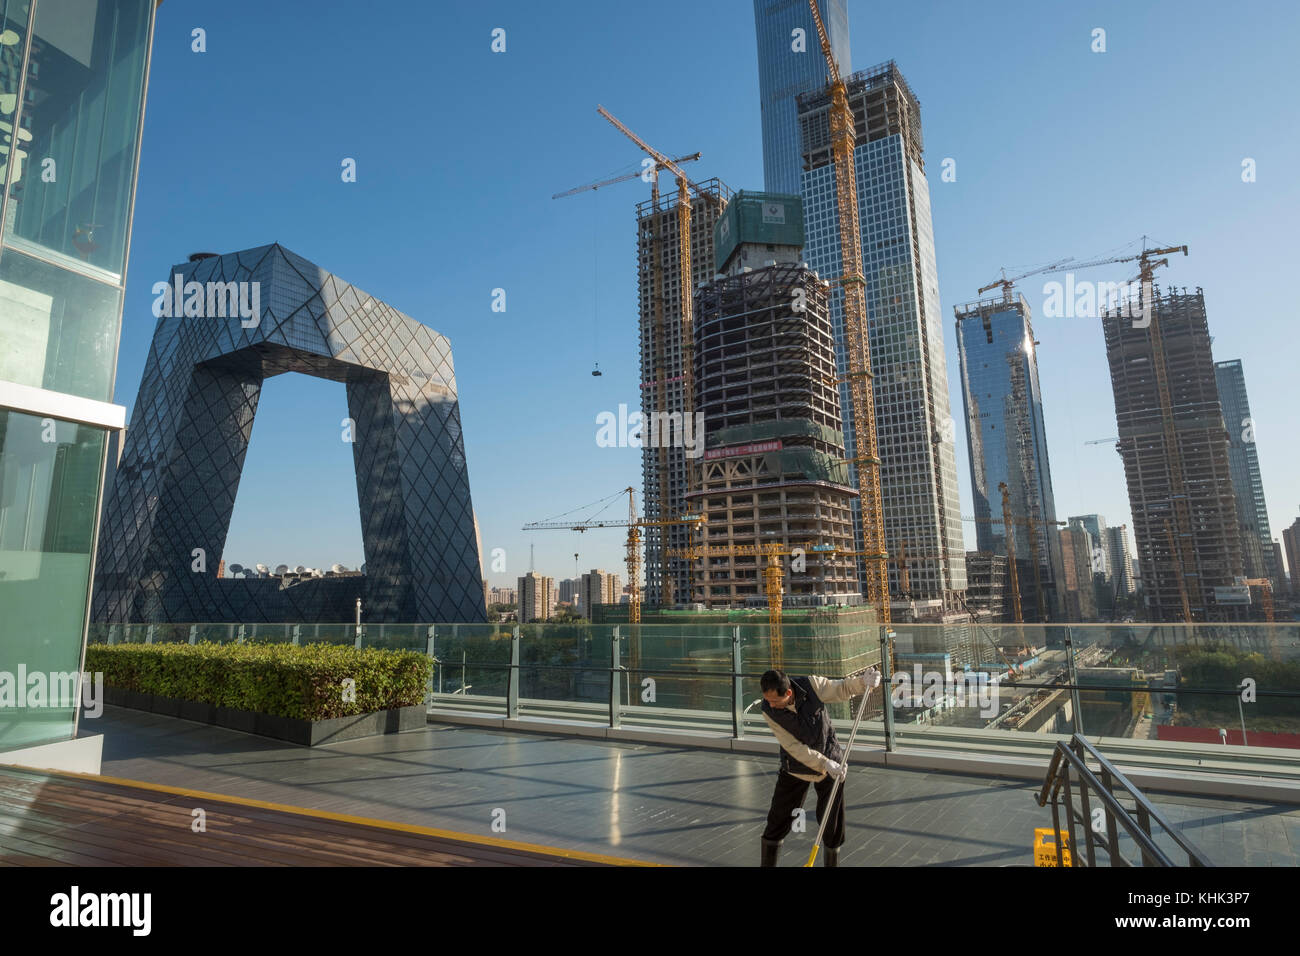 China Central Television(CCTV) tower (Left) in Beijing CBD. 03-Nov-2017 Stock Photo